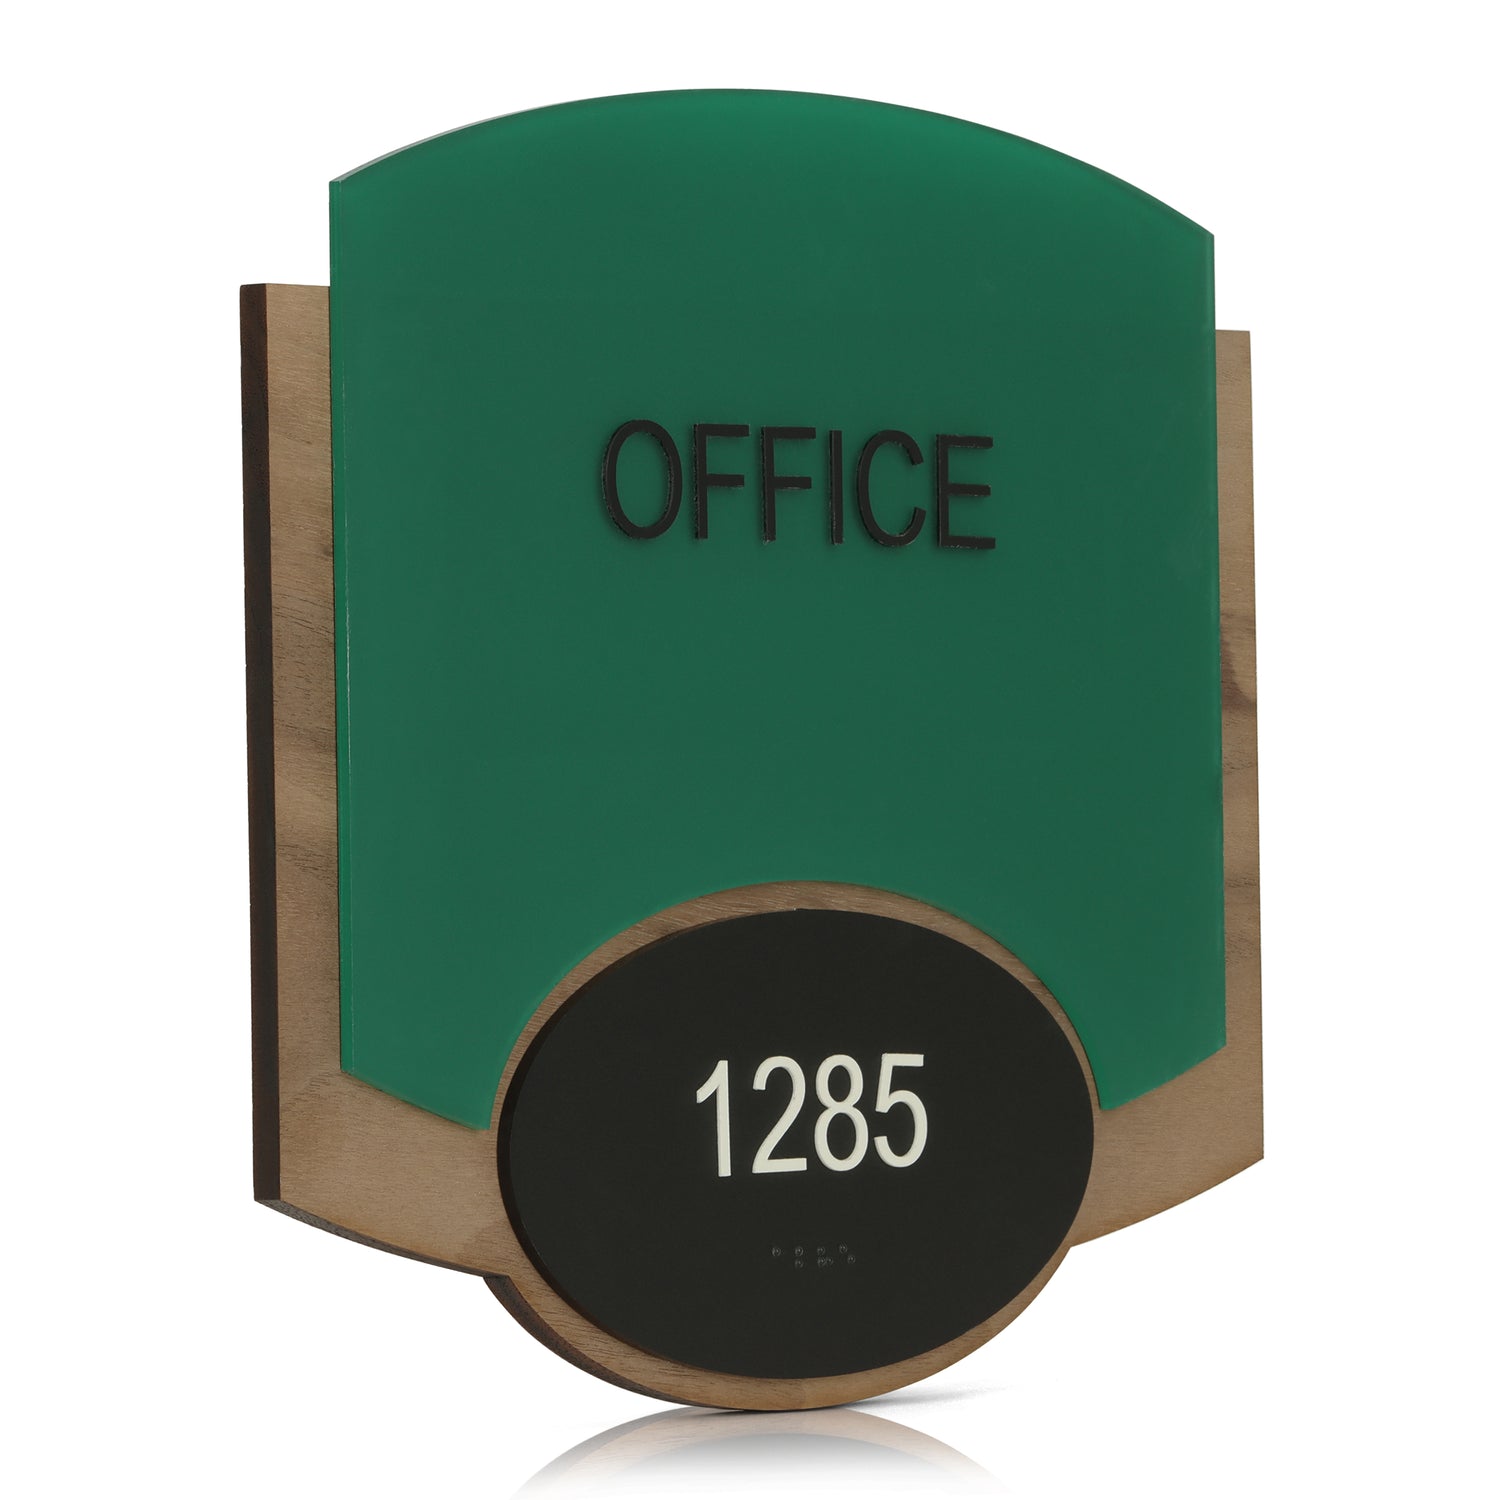 Office 1285 Signage